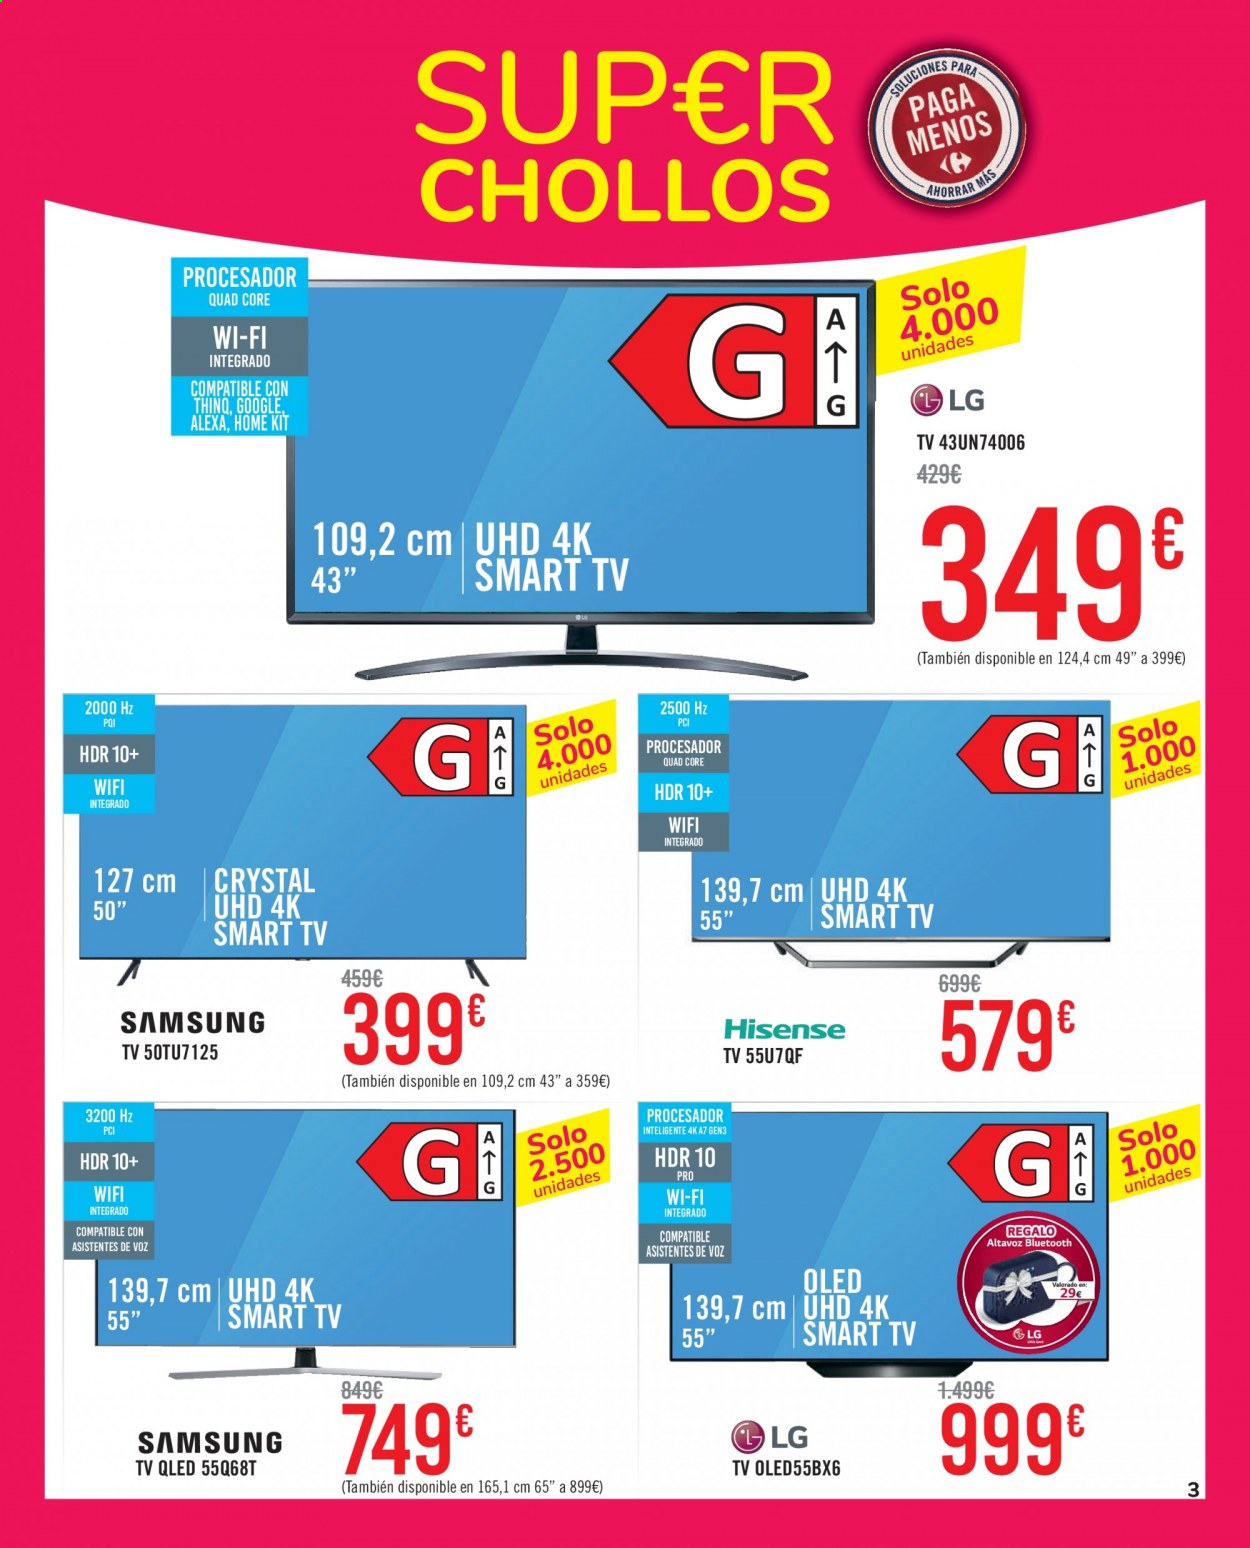 thumbnail - Folleto actual Carrefour - 27/04/21 - 10/05/21 - Ventas - LG, Samsung, Hisense, Smart TV, televisor, altavoz. Página 3.